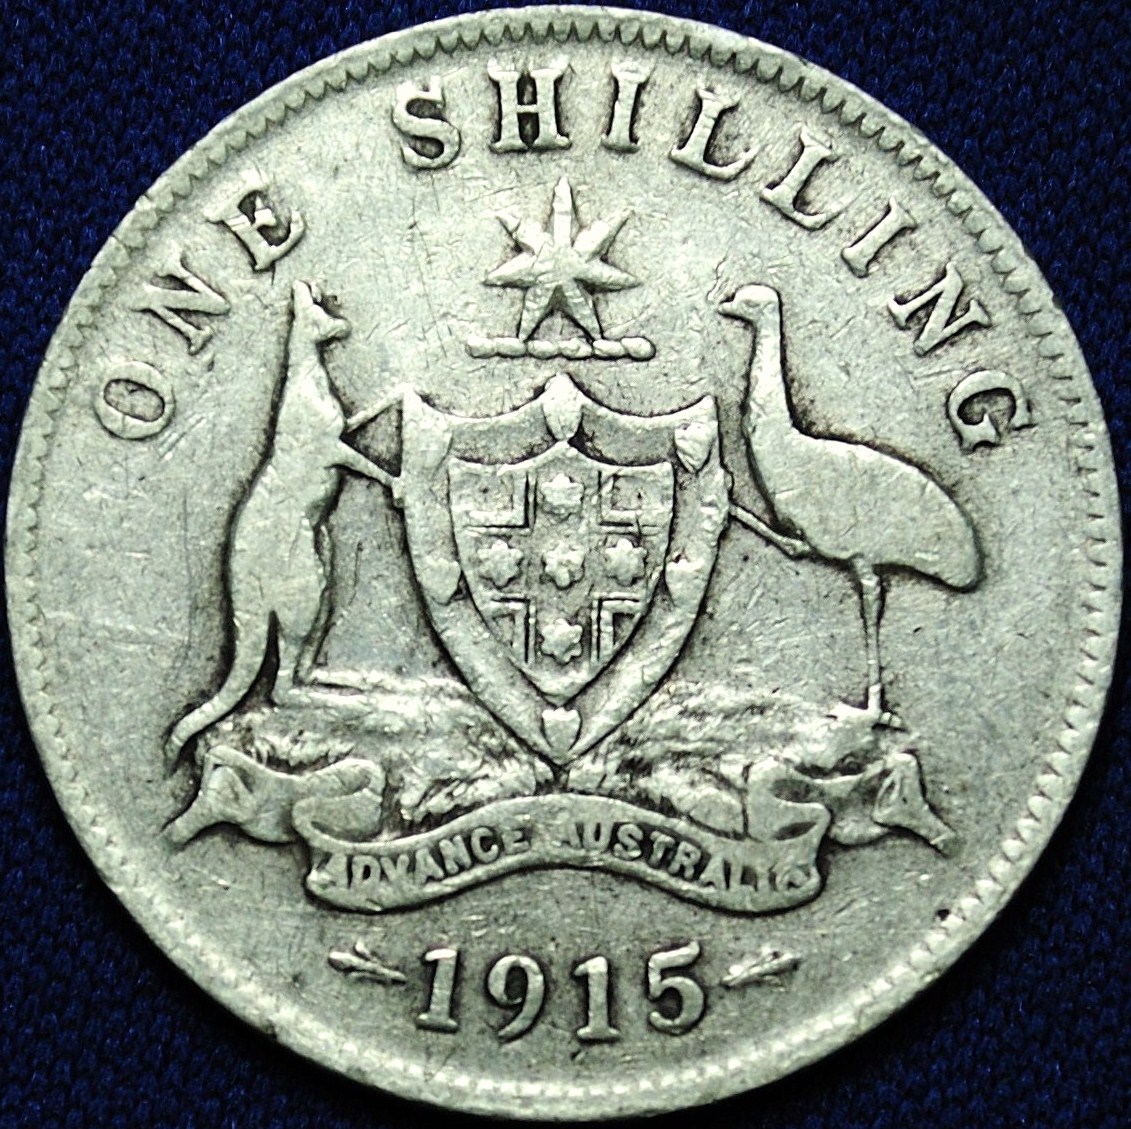 1915 Australian shilling reverse